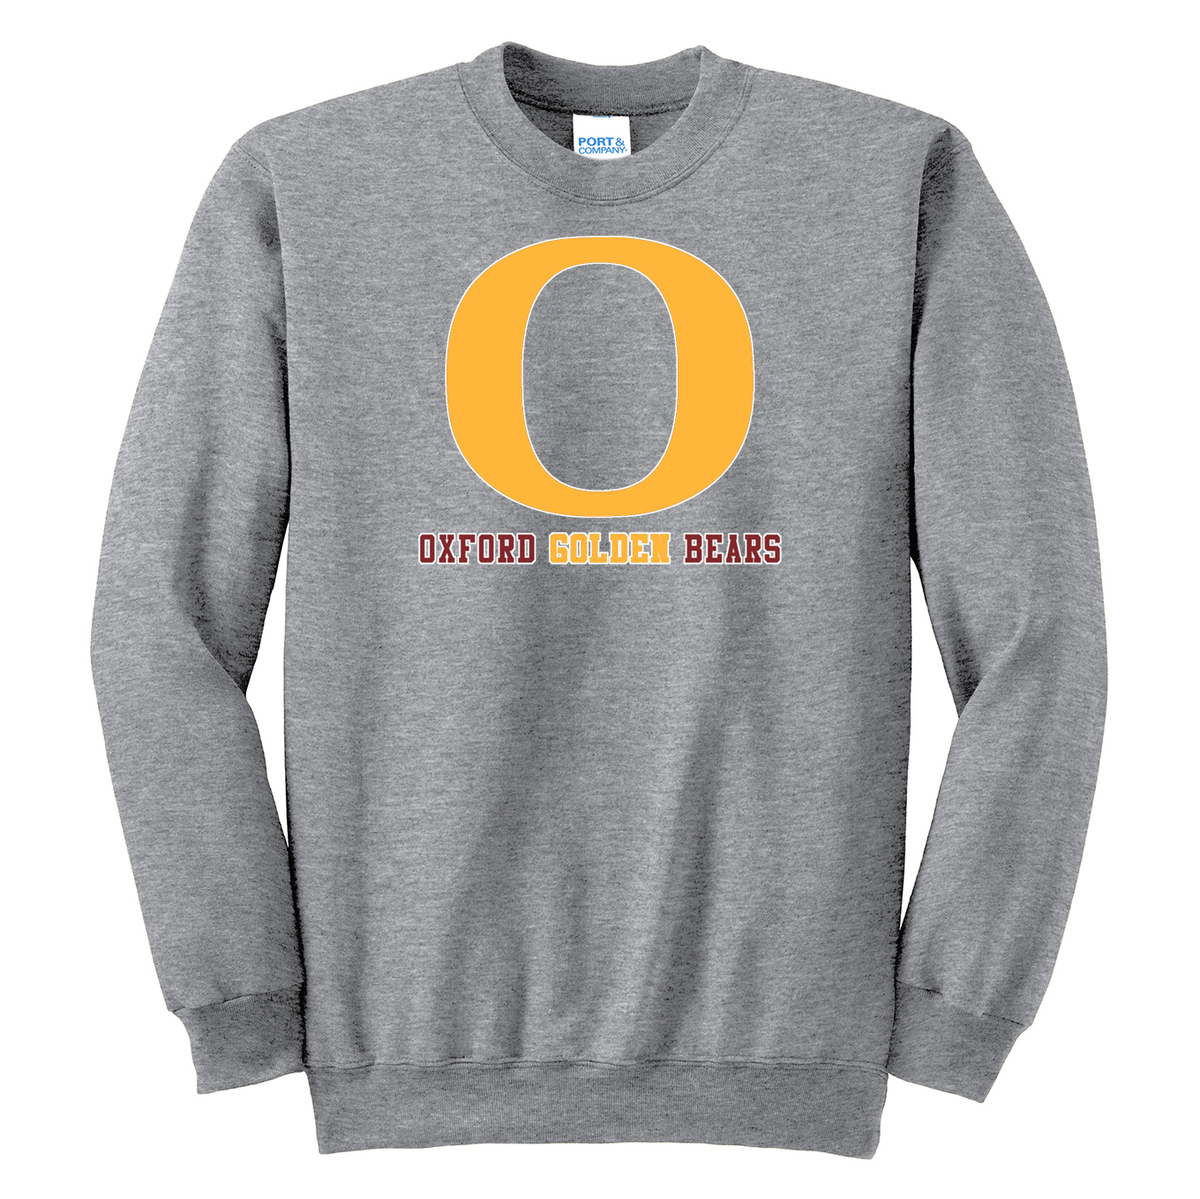 Oxford Golden Bears Crew Neck Sweater